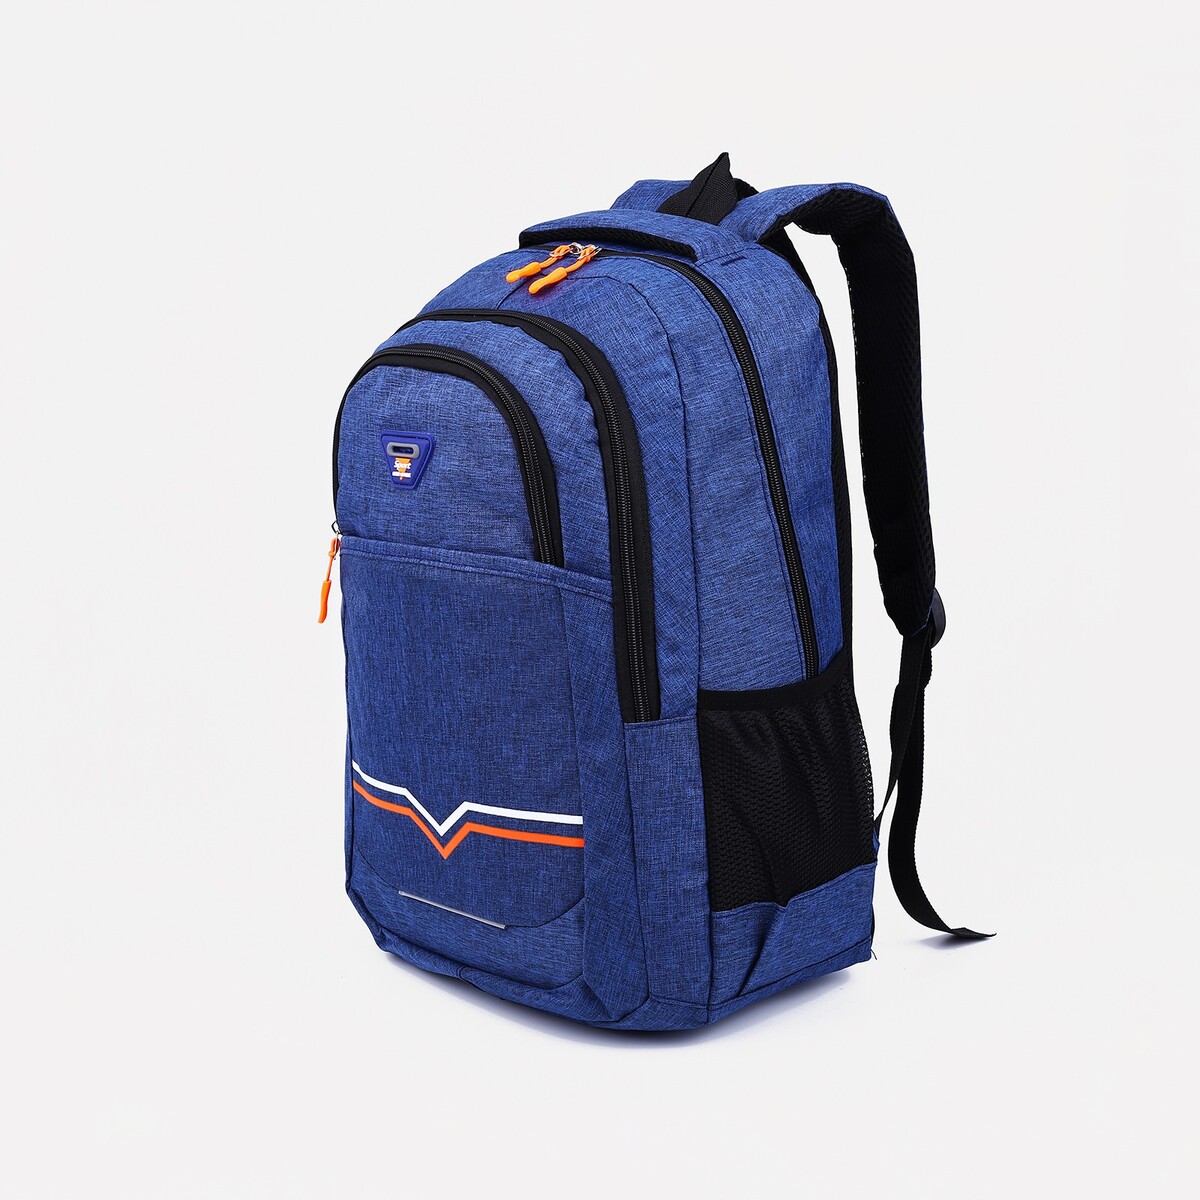 Рюкзак на молнии, 2 наружных кармана, цвет синий рюкзак на молнии с usb 4 наружных кармана сумка пенал синий